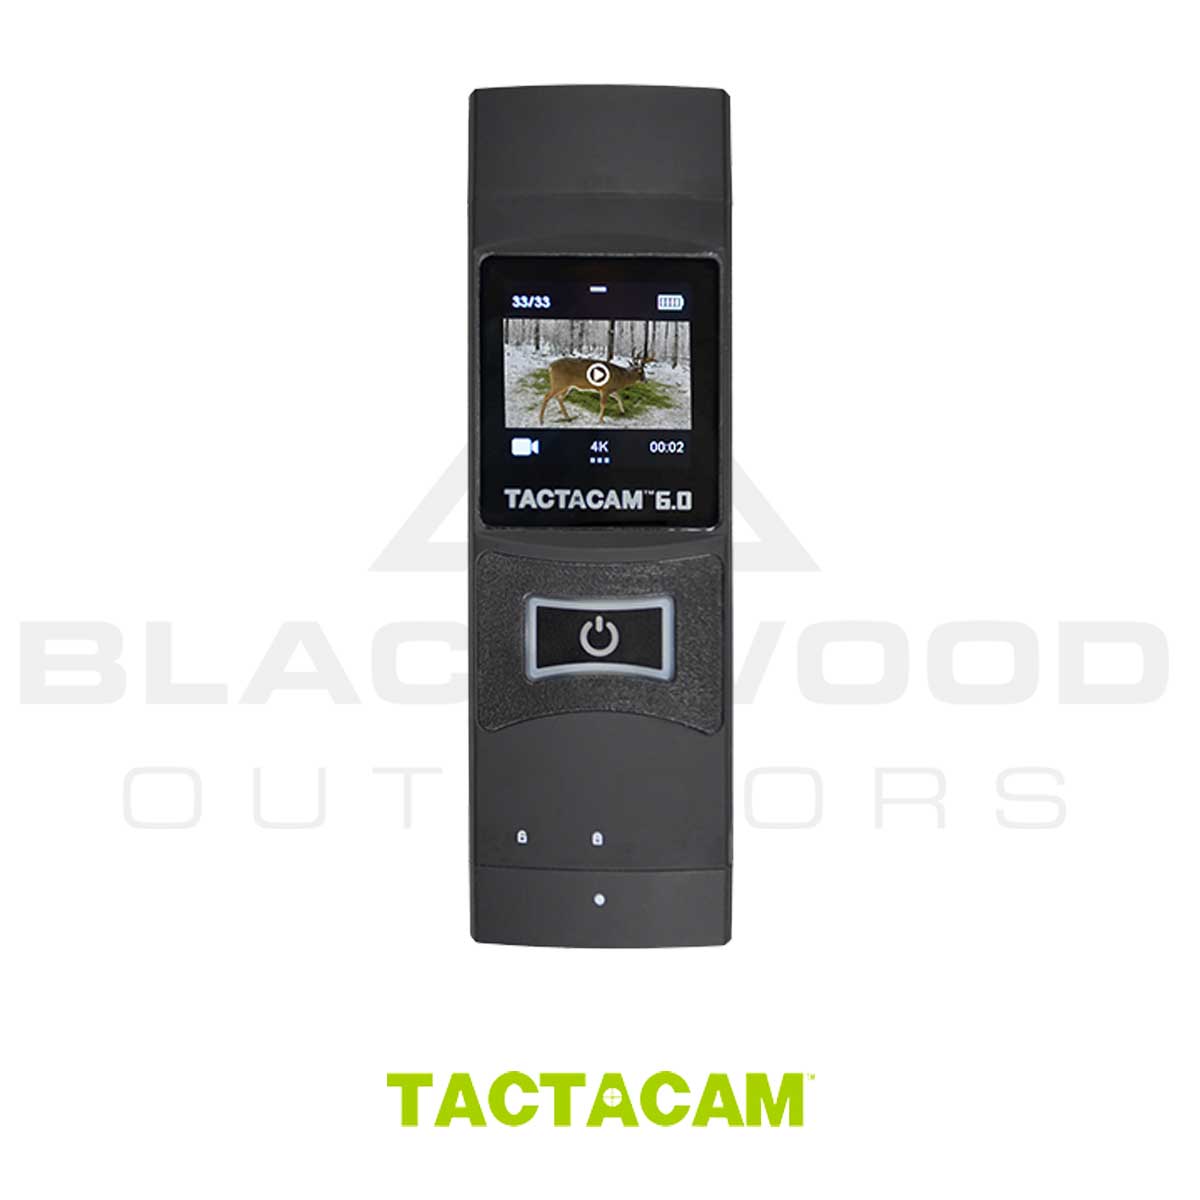 Tactacam Vertical Image Gun Camera